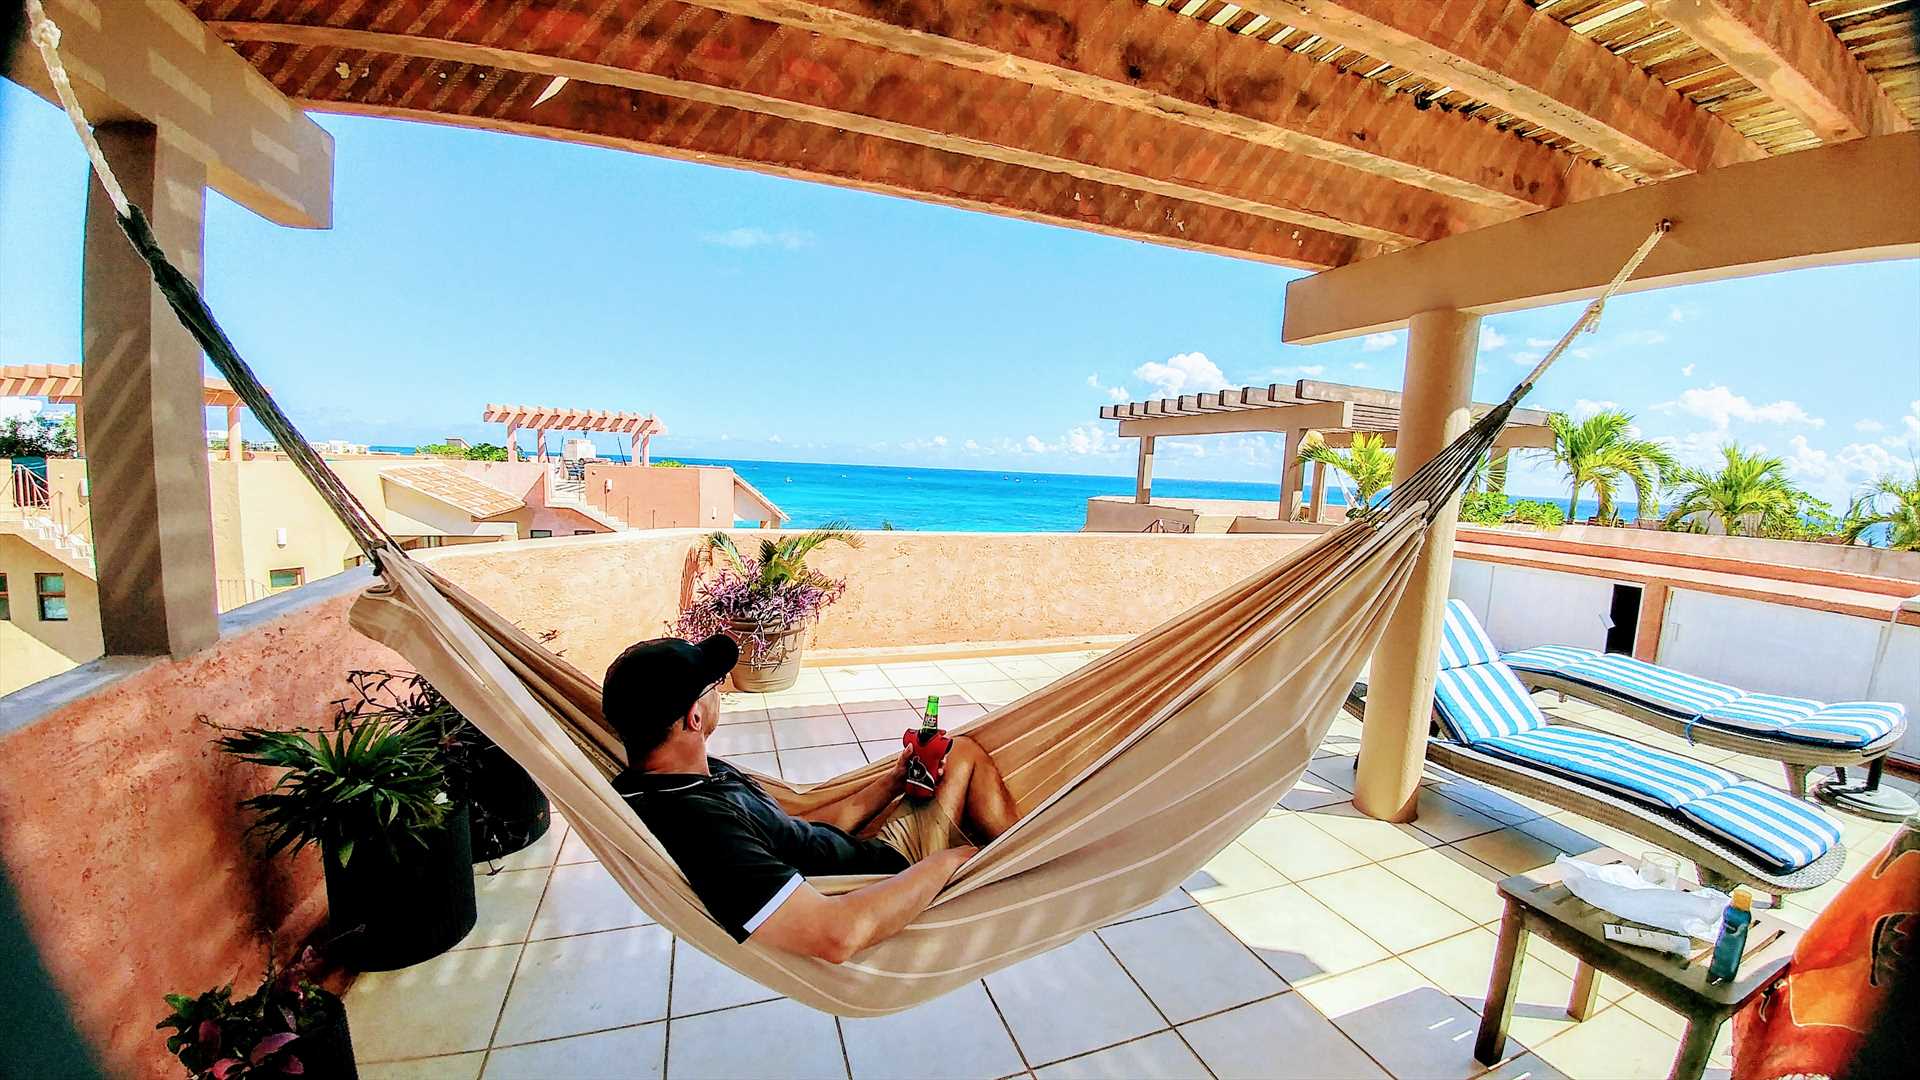 Enjoy relaxing in the rooftop hammock!